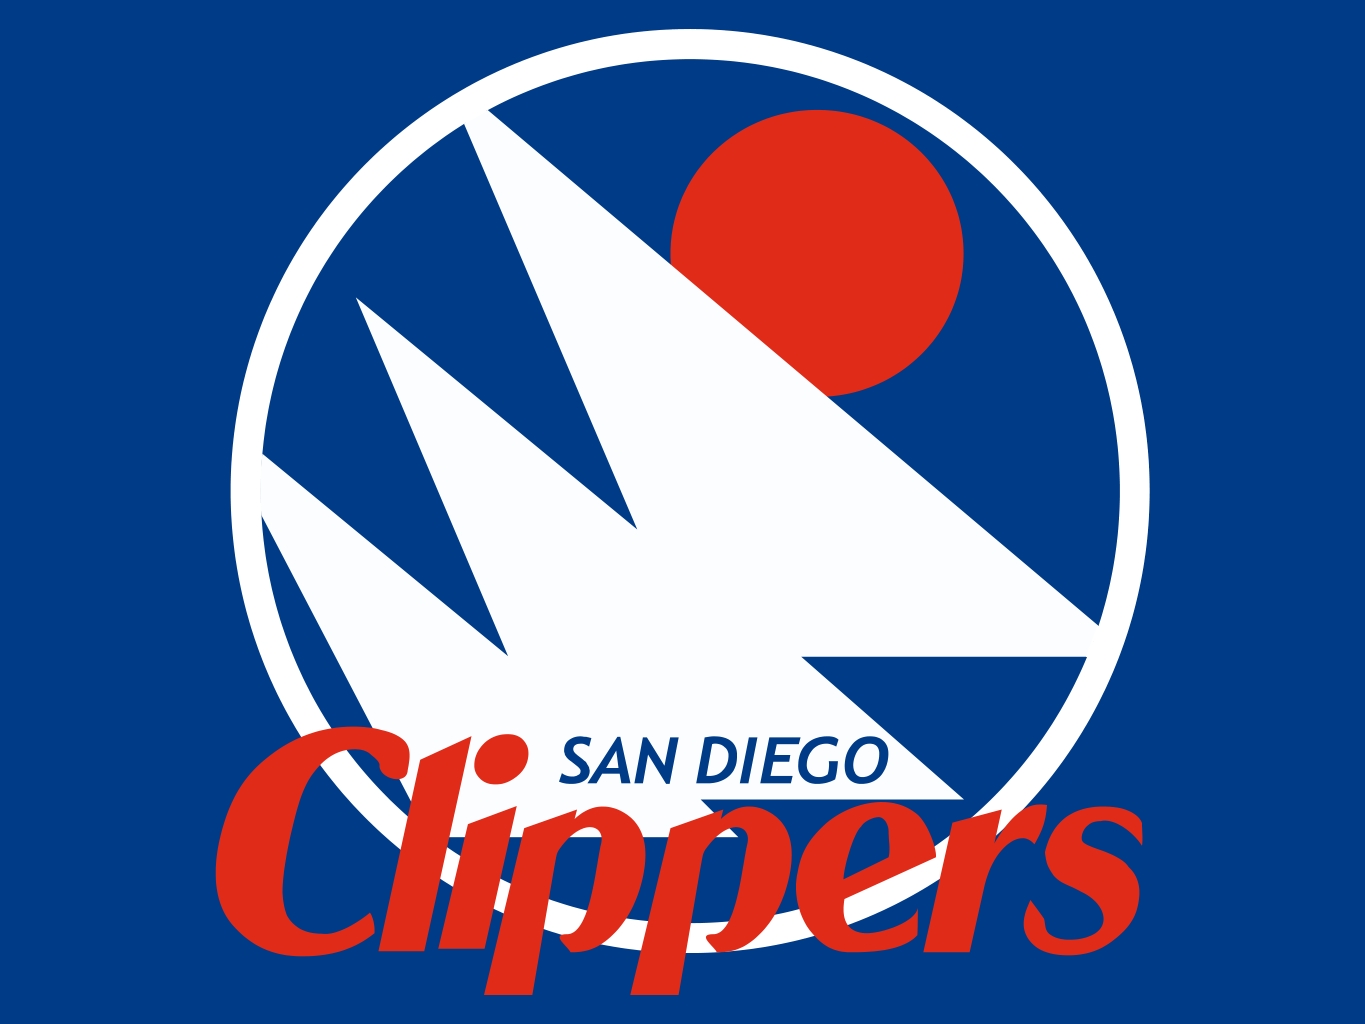 San Diego Clippers | Pro Sports Teams Wiki | FANDOM powered by Wikia